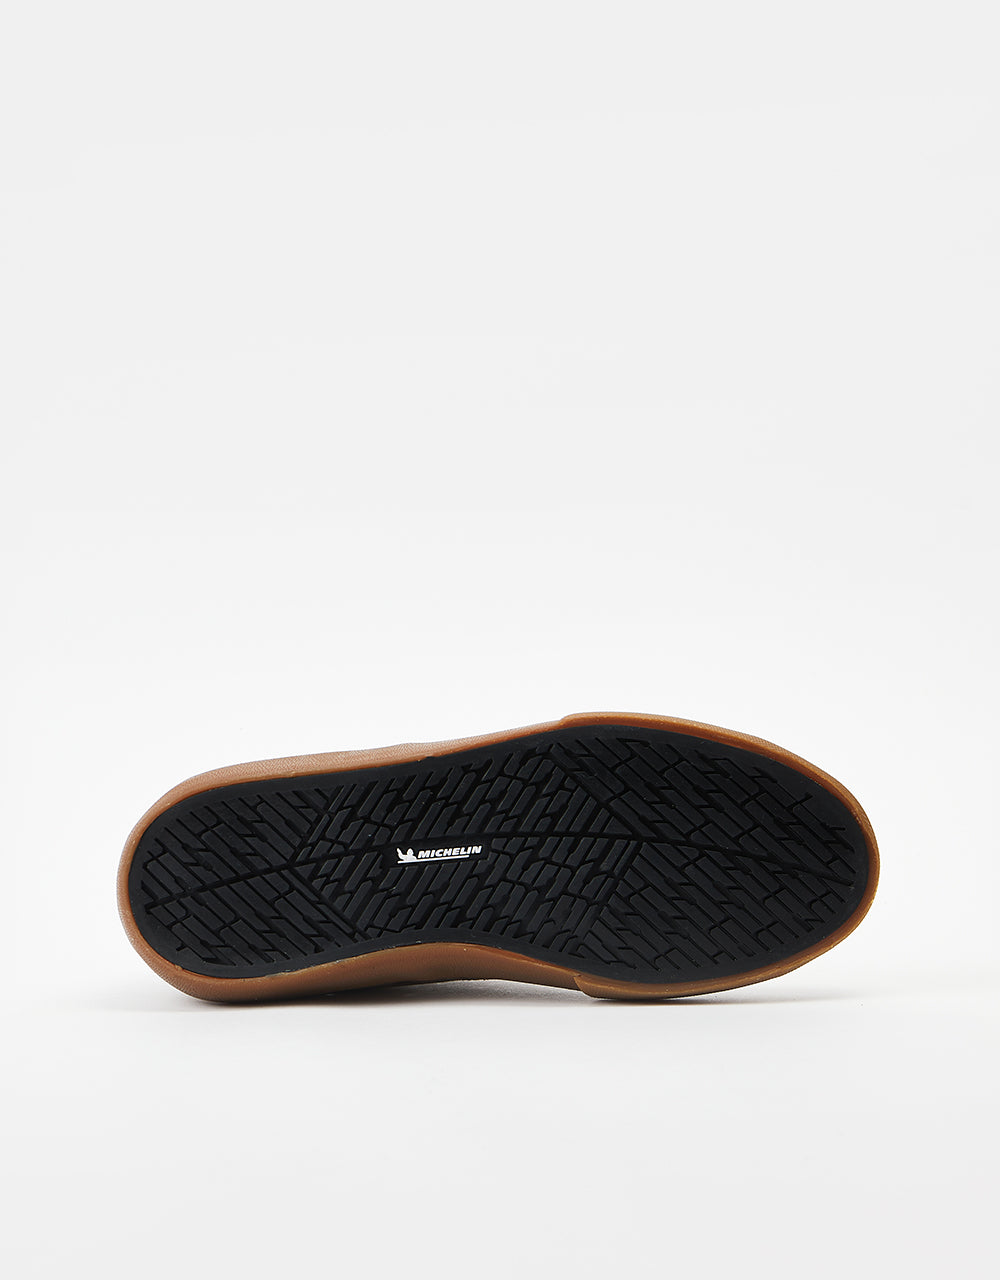 Etnies x Michelin Singleton Vulc XLT Skate Shoes - Tan/Gum